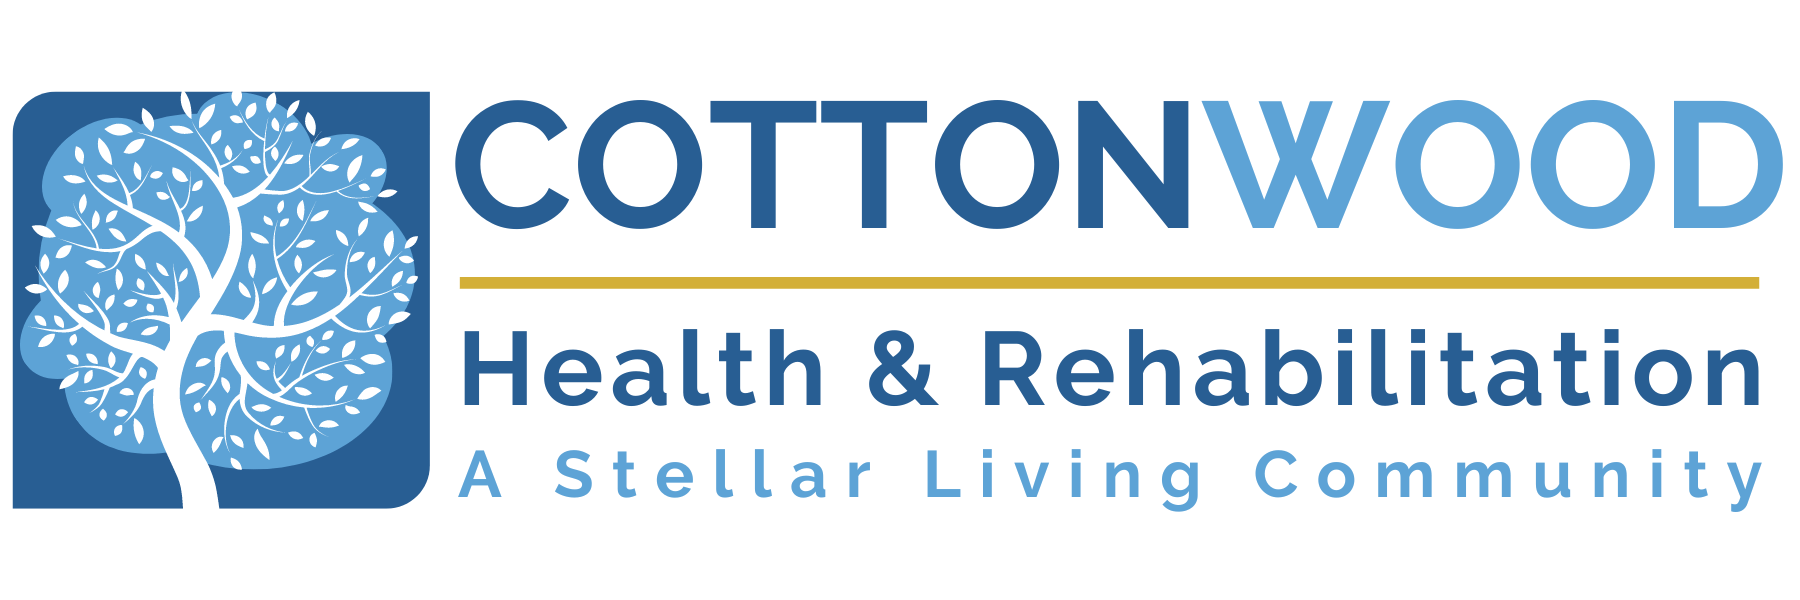 Cottonwood Health & Rehabilitation Logo